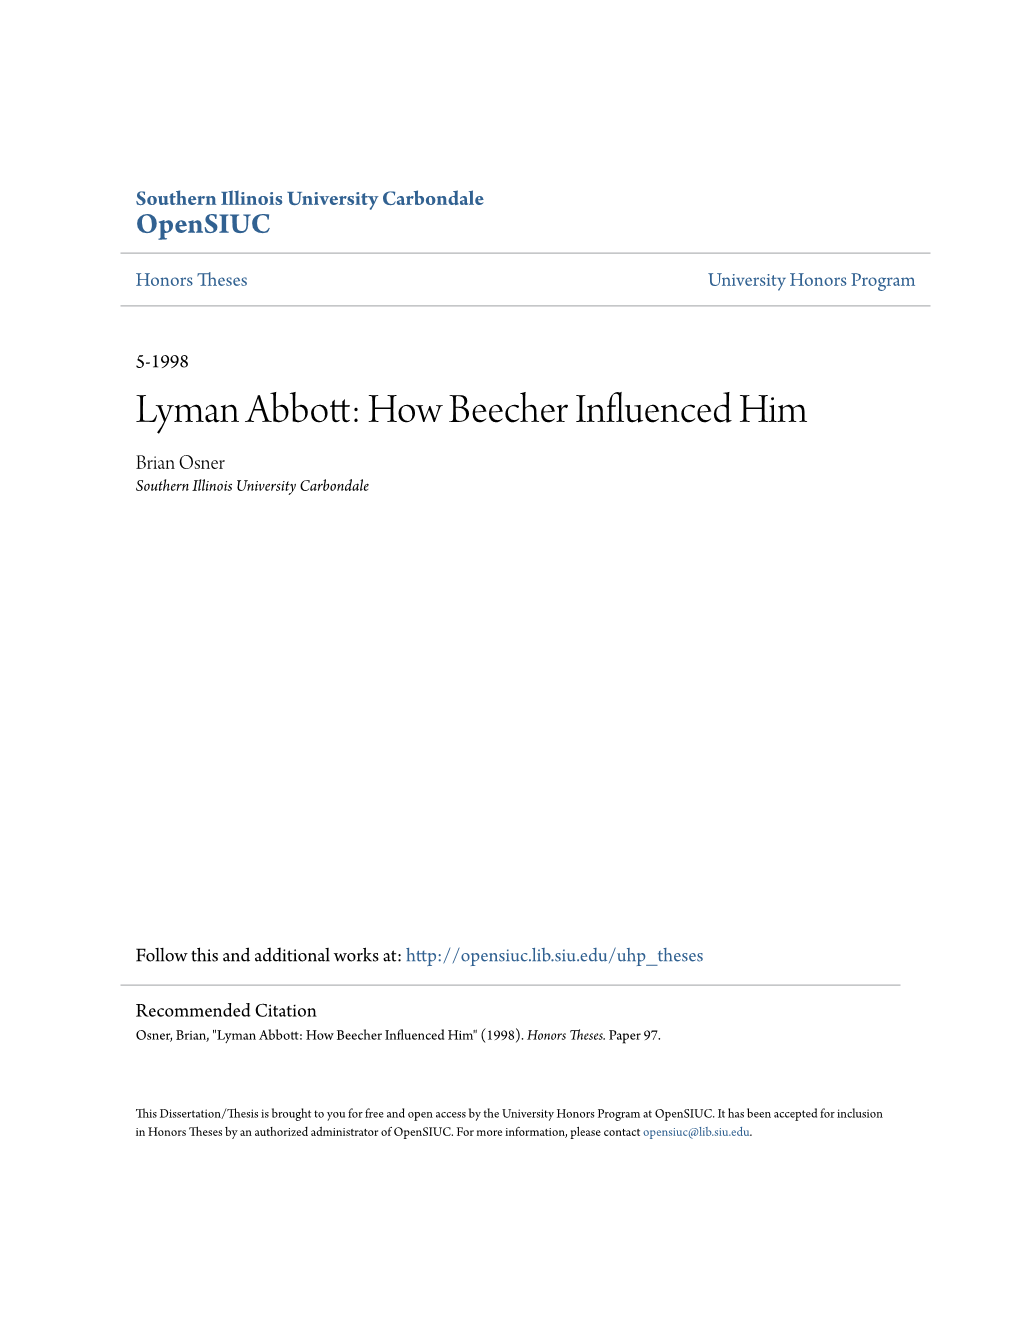 Lyman Abbott: How Beecher Influenced Him Brian Osner Southern Illinois University Carbondale